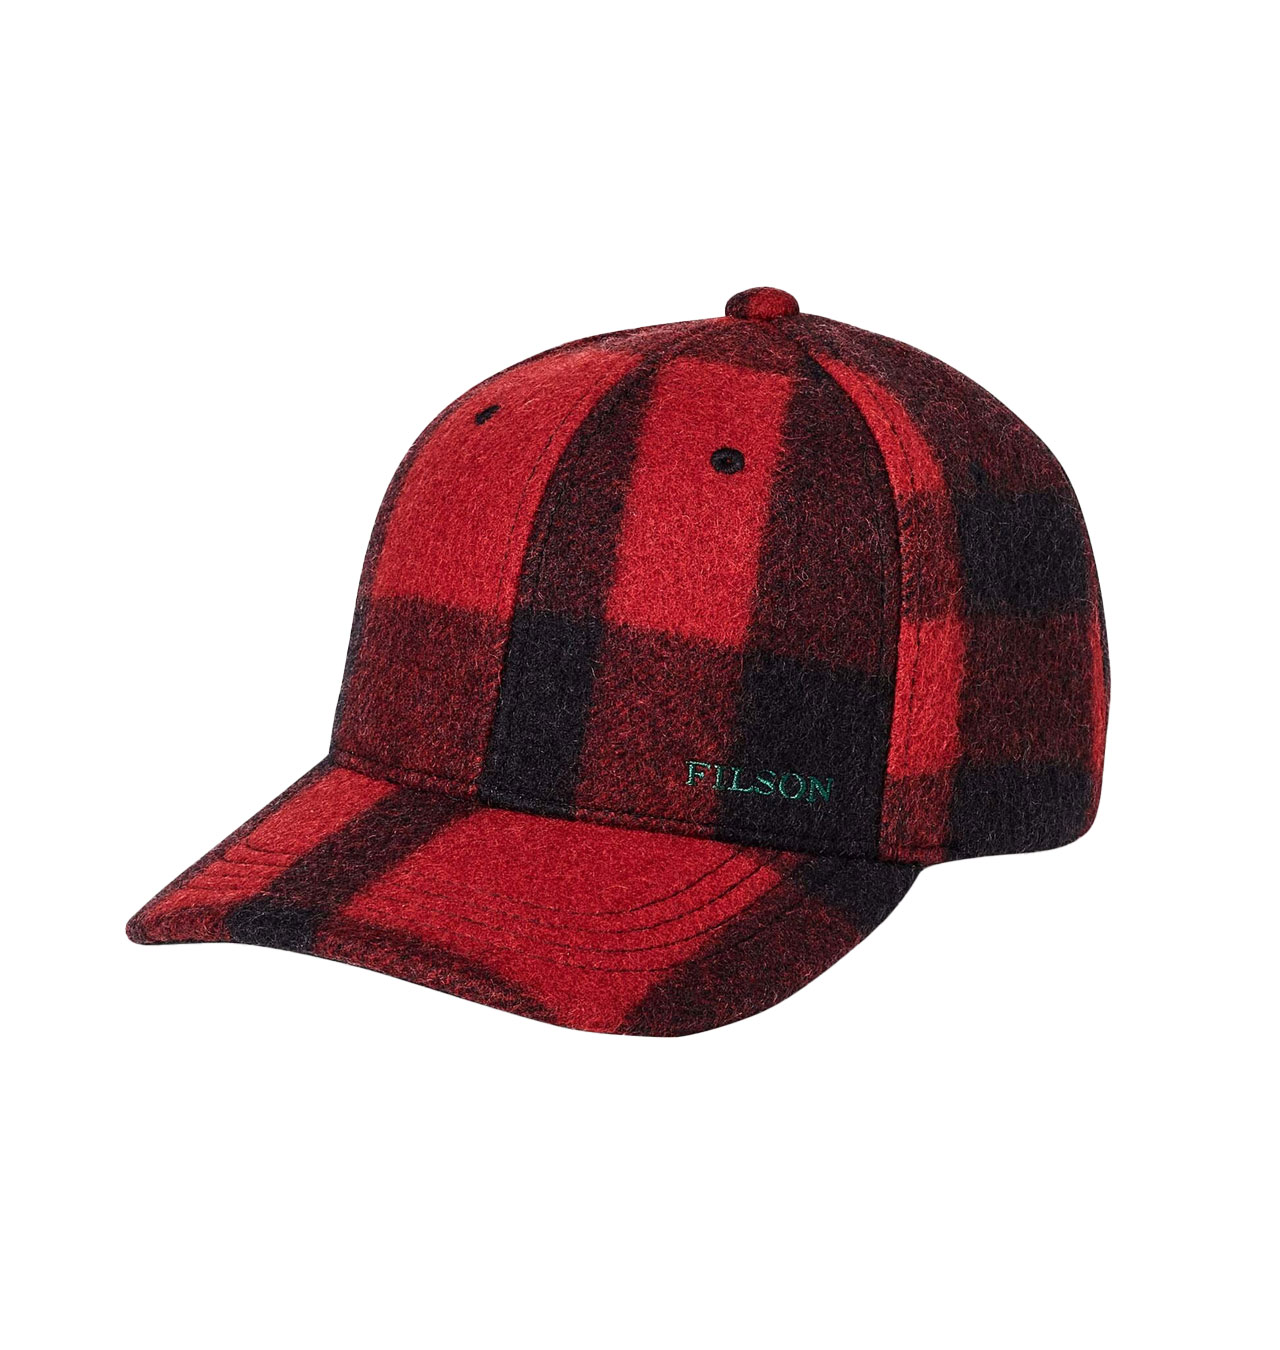 Filson---Wool-Logger-Cap---Red-Black-Heritage